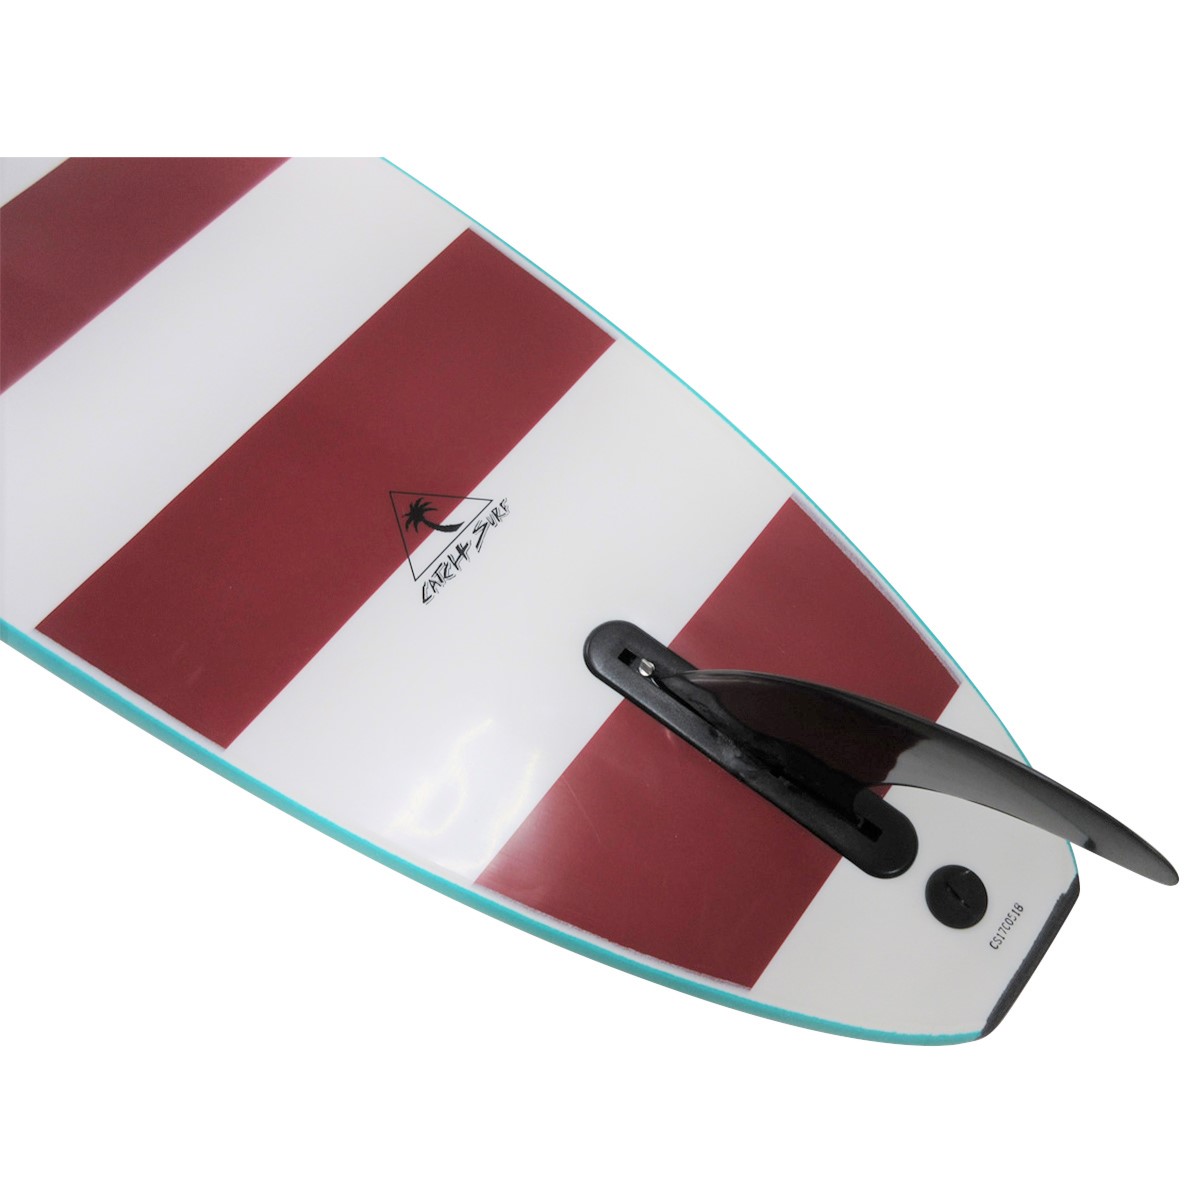 CATCH SURF / ODYSEA PLANK 8`0